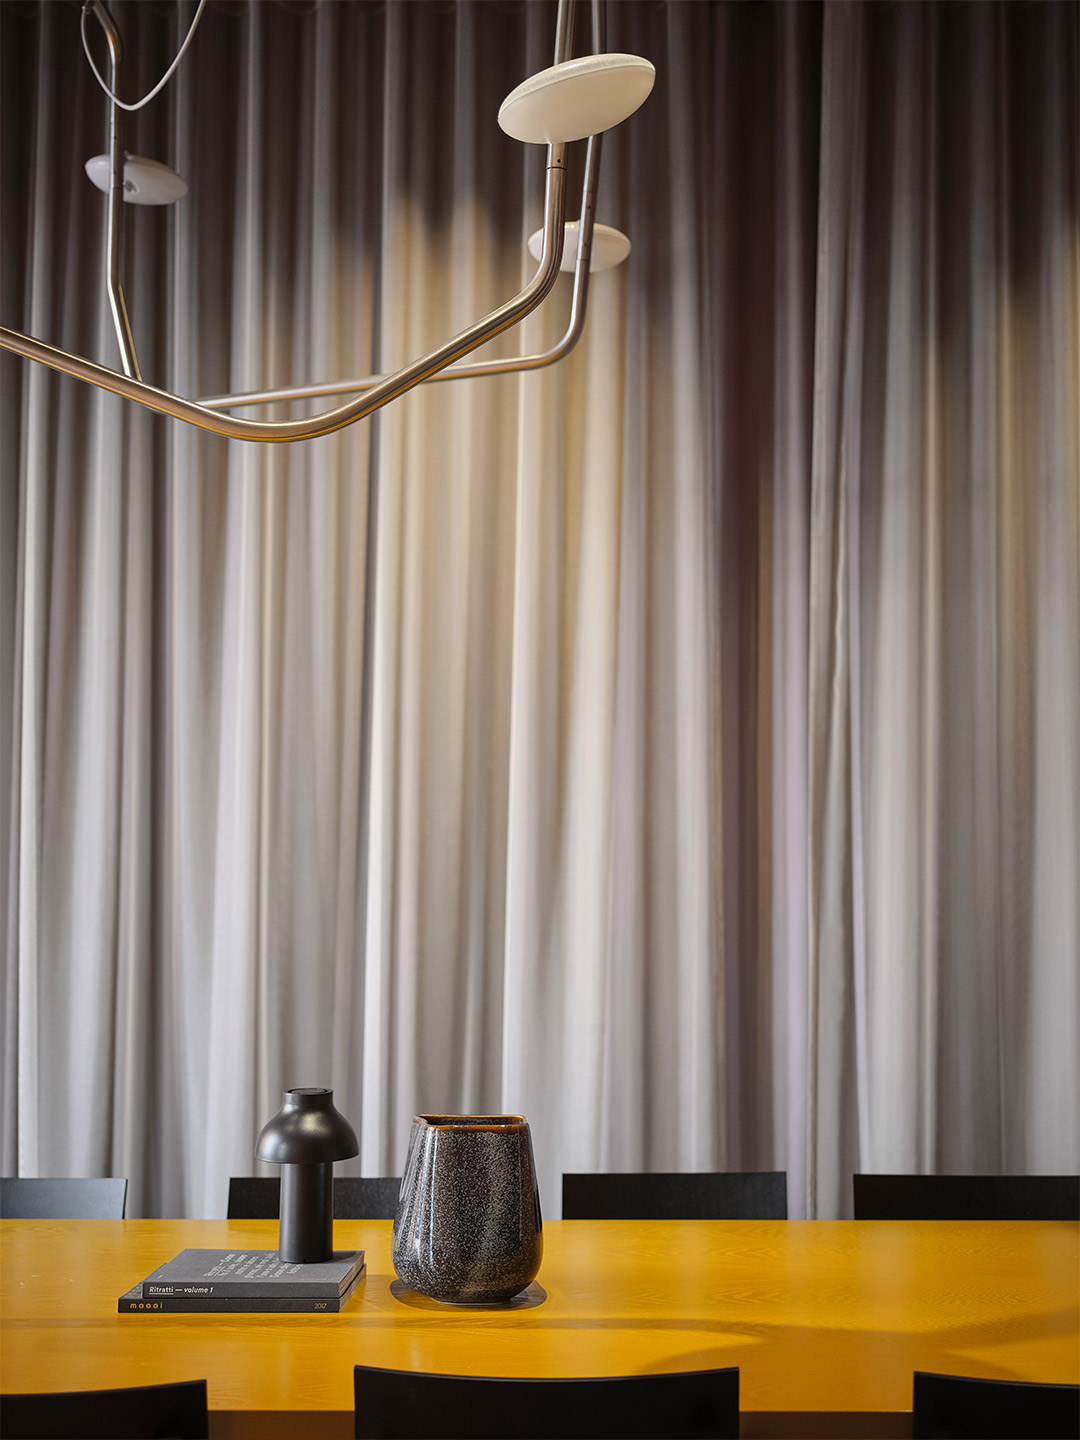 The Samsen Atelier workspace and wine bar in Sweden by Note Design Studio